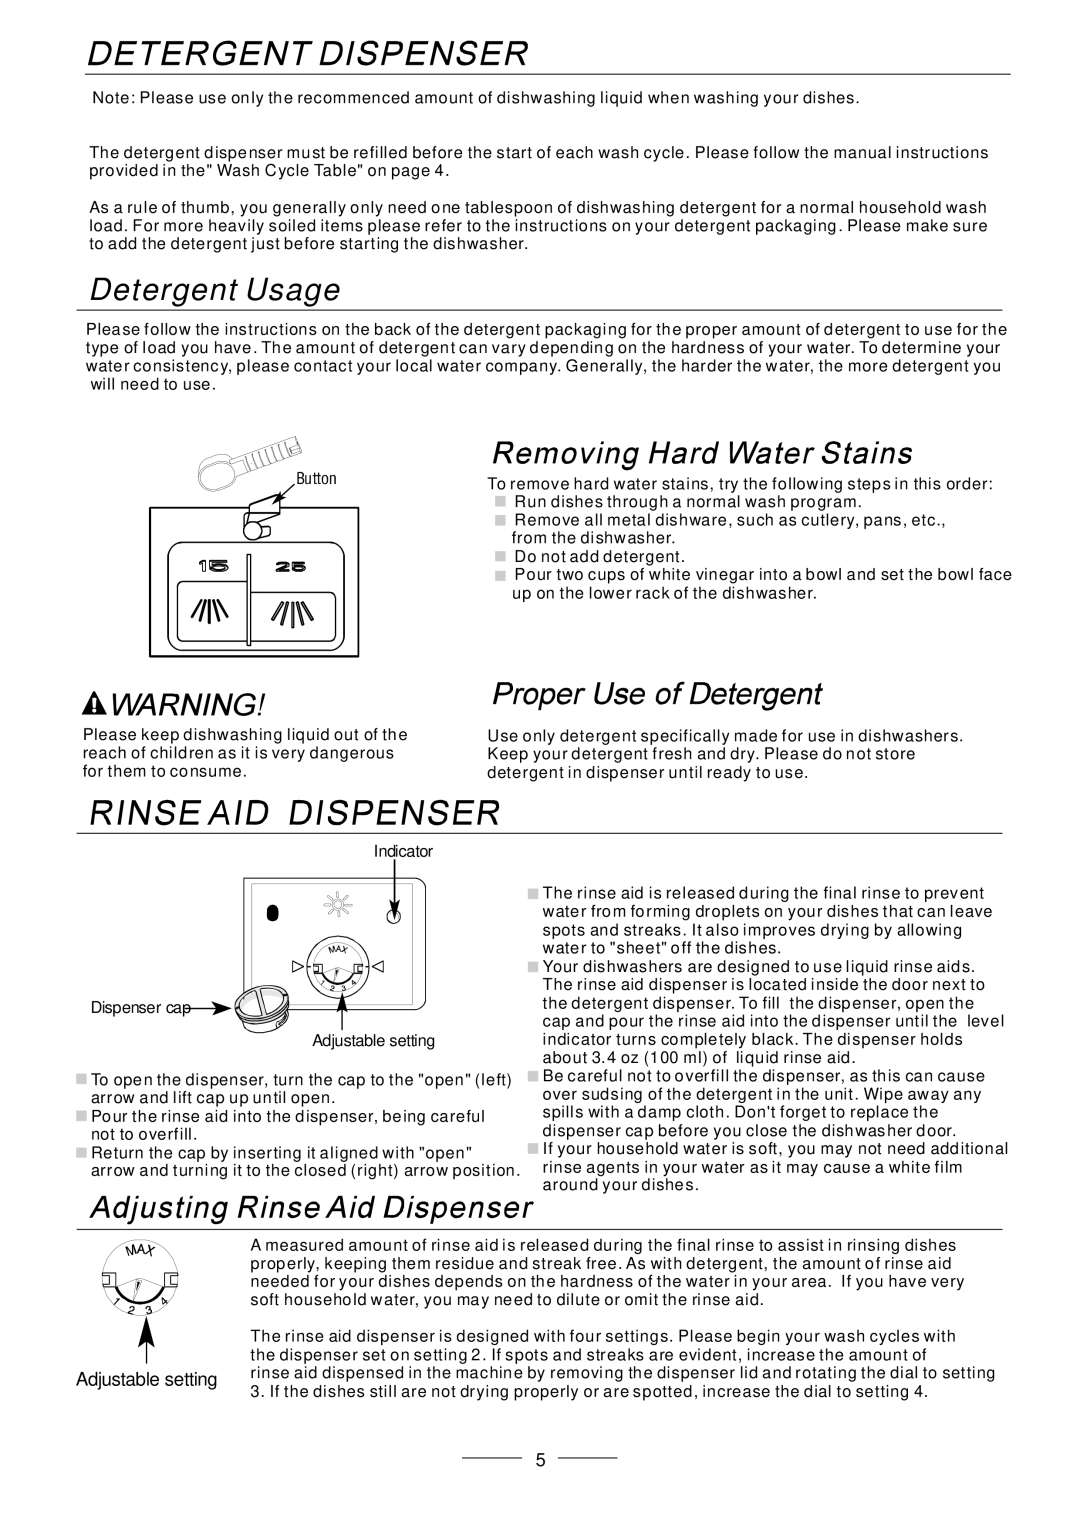 Fagor America LFA-45X instruction manual Detergent Usage 